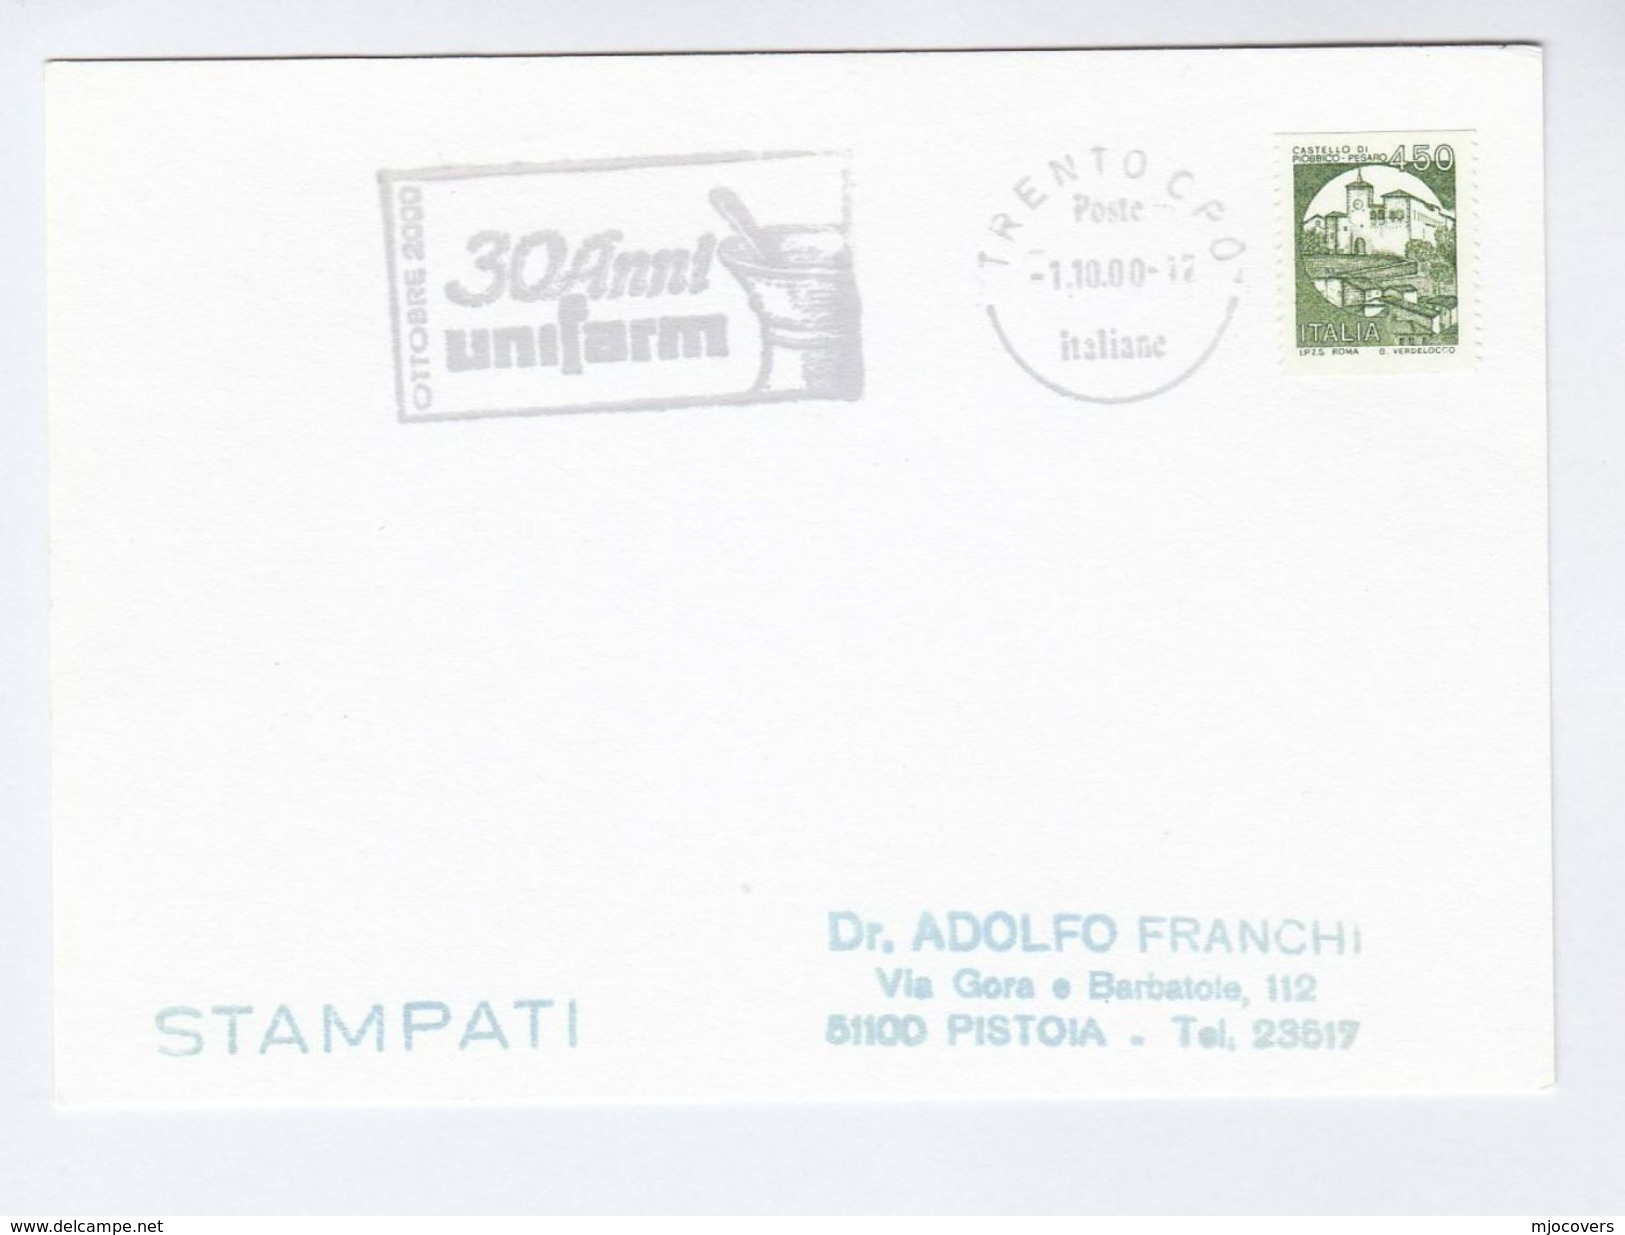 2000 Trento ITALY PHARMACY EVENT COVER  SLOGAN Illus MORTAR PESTLE, UNIFARM 30th ANNIV Medicine Health Stamps - Pharmazie